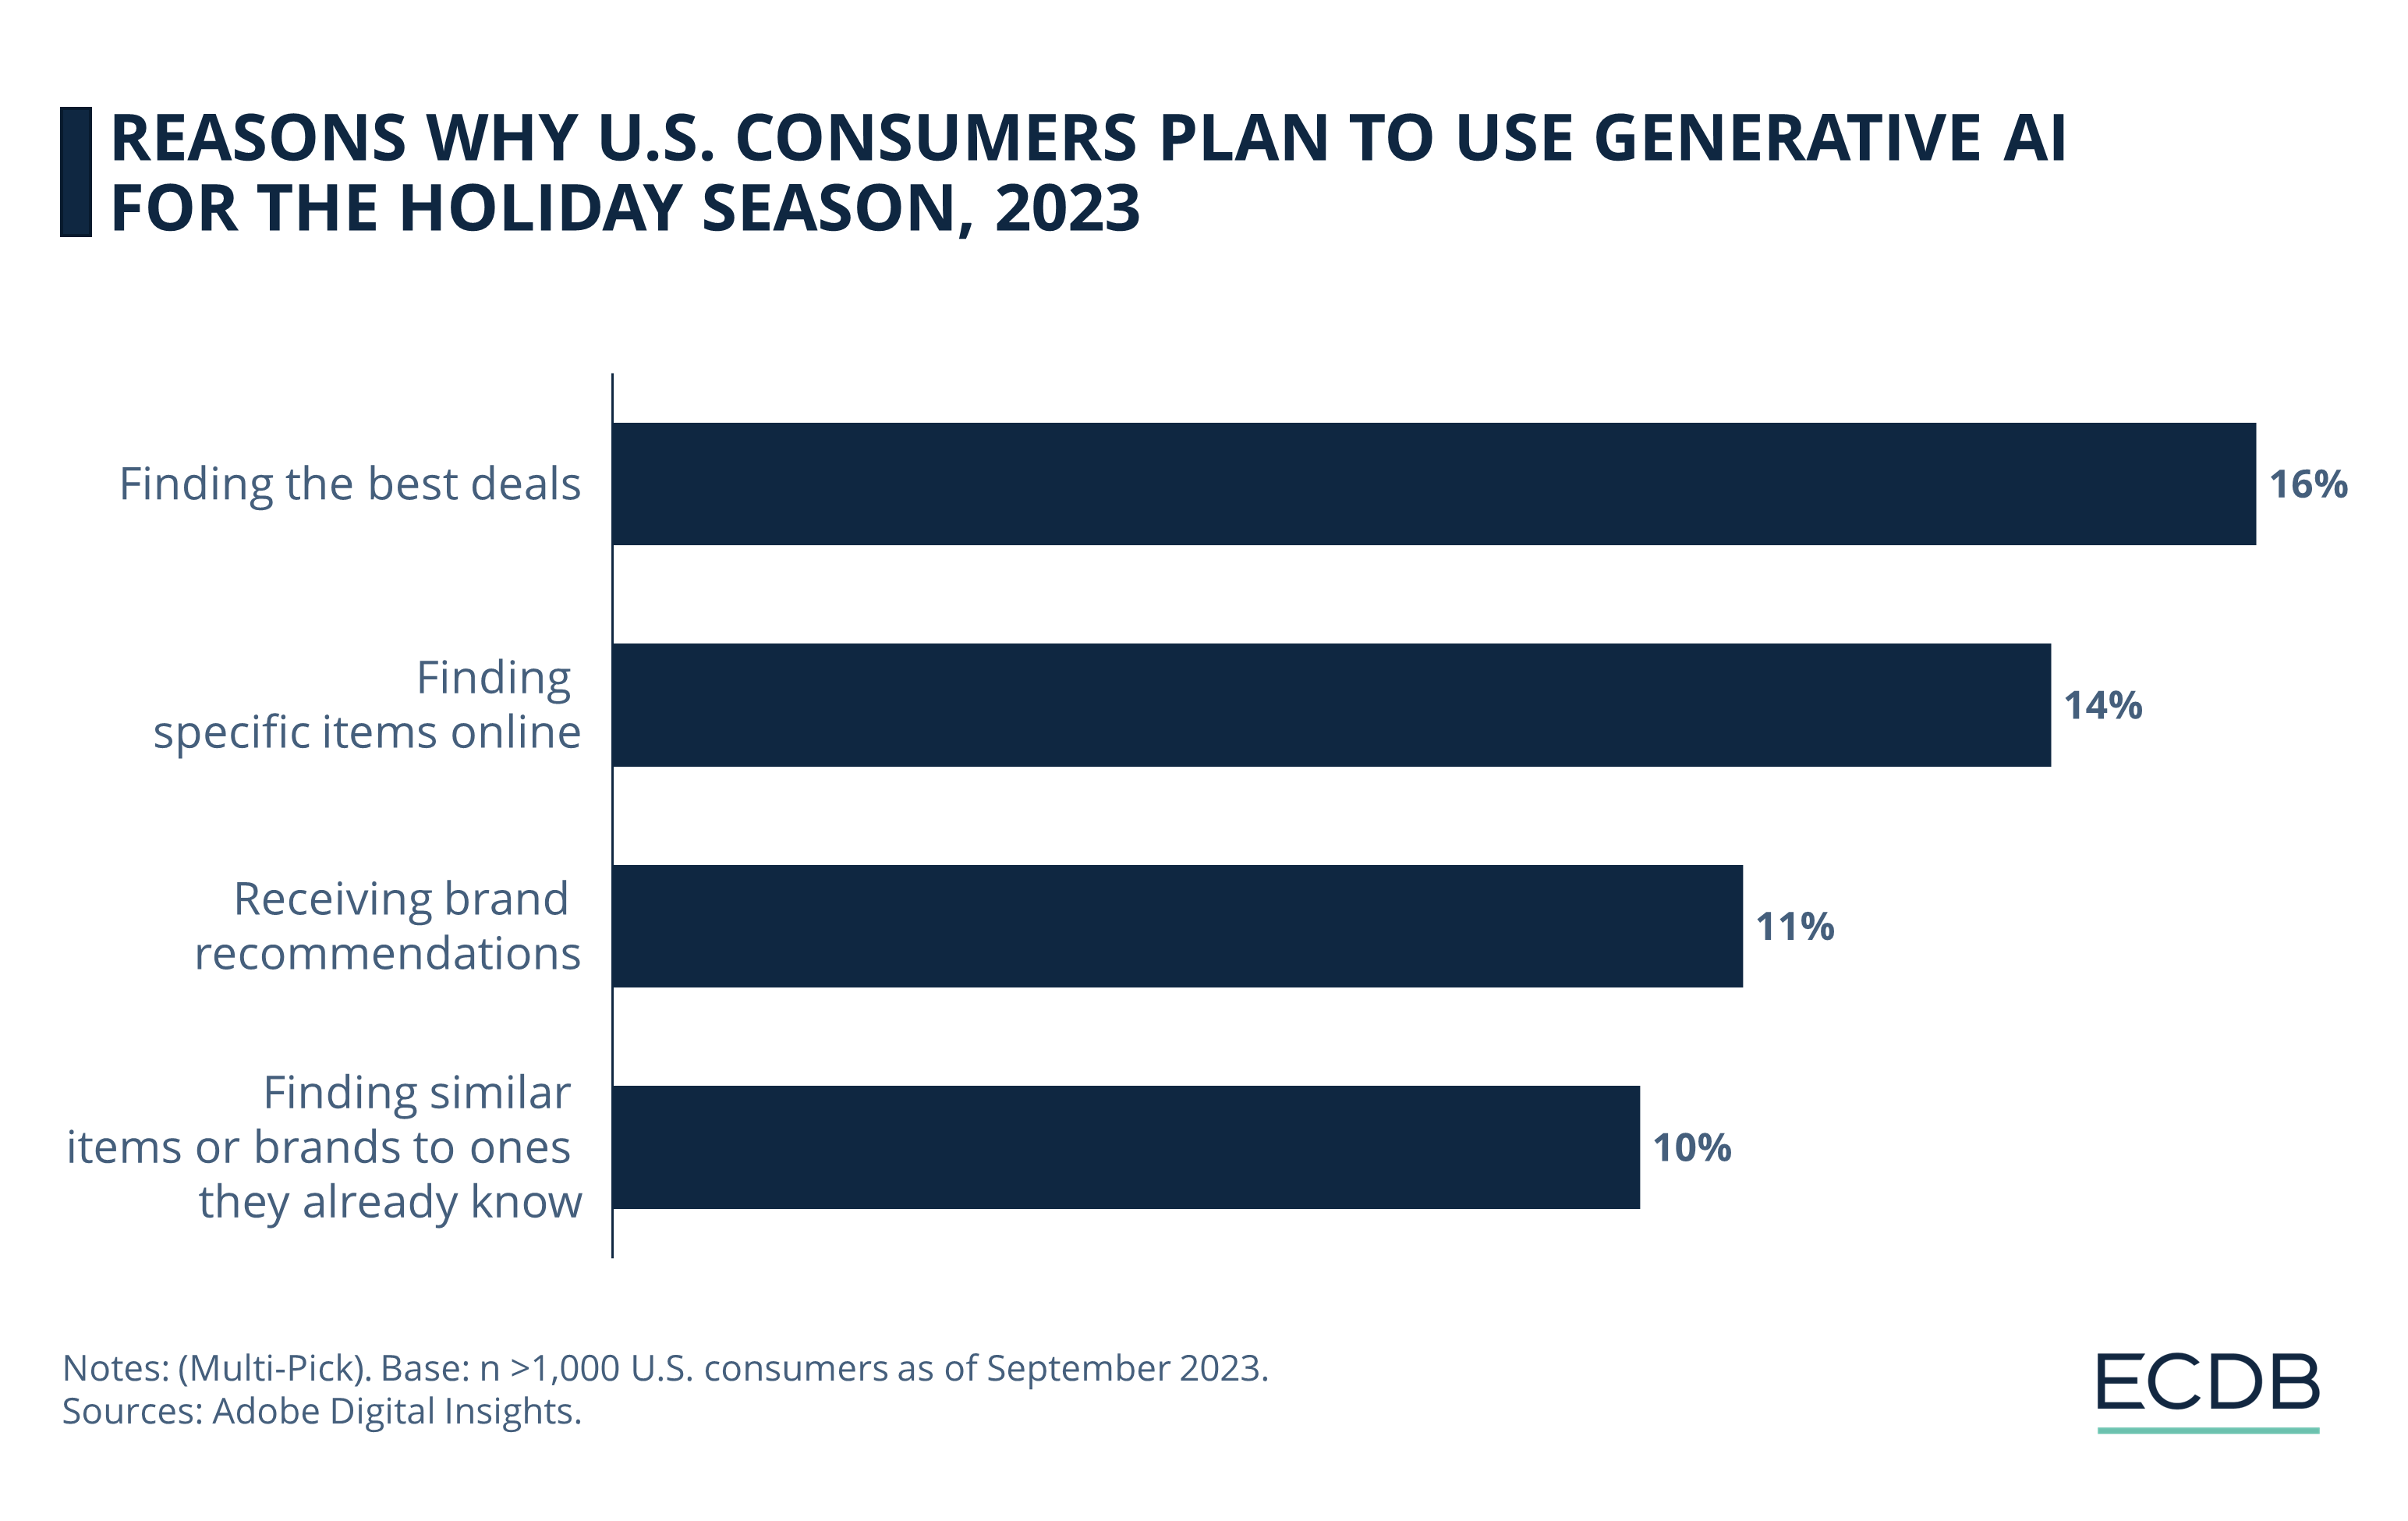 Reasons Why U.S. Consumers Plan to Use Generative AI This Holiday Season, 2023